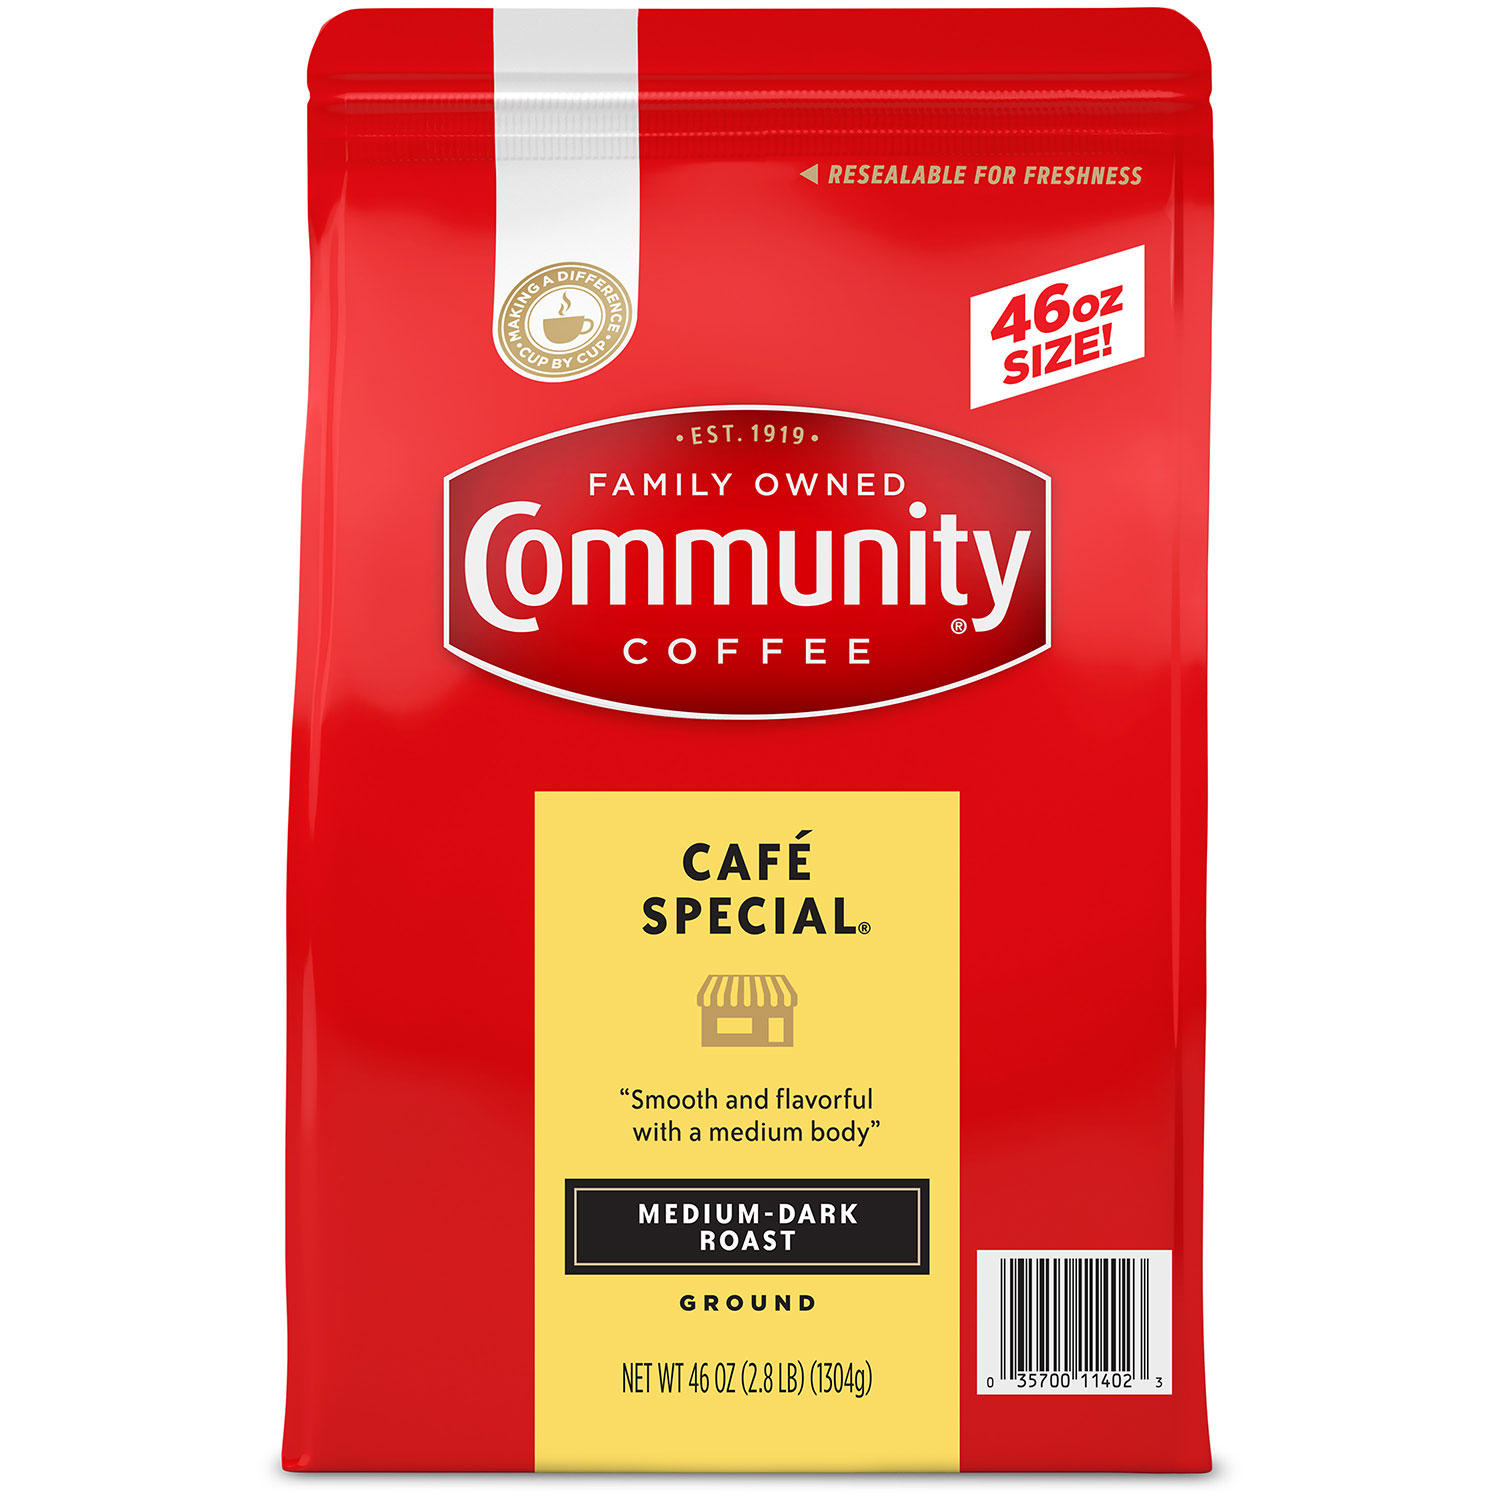 Community Coffee Ground Cafe Special (46 oz.)